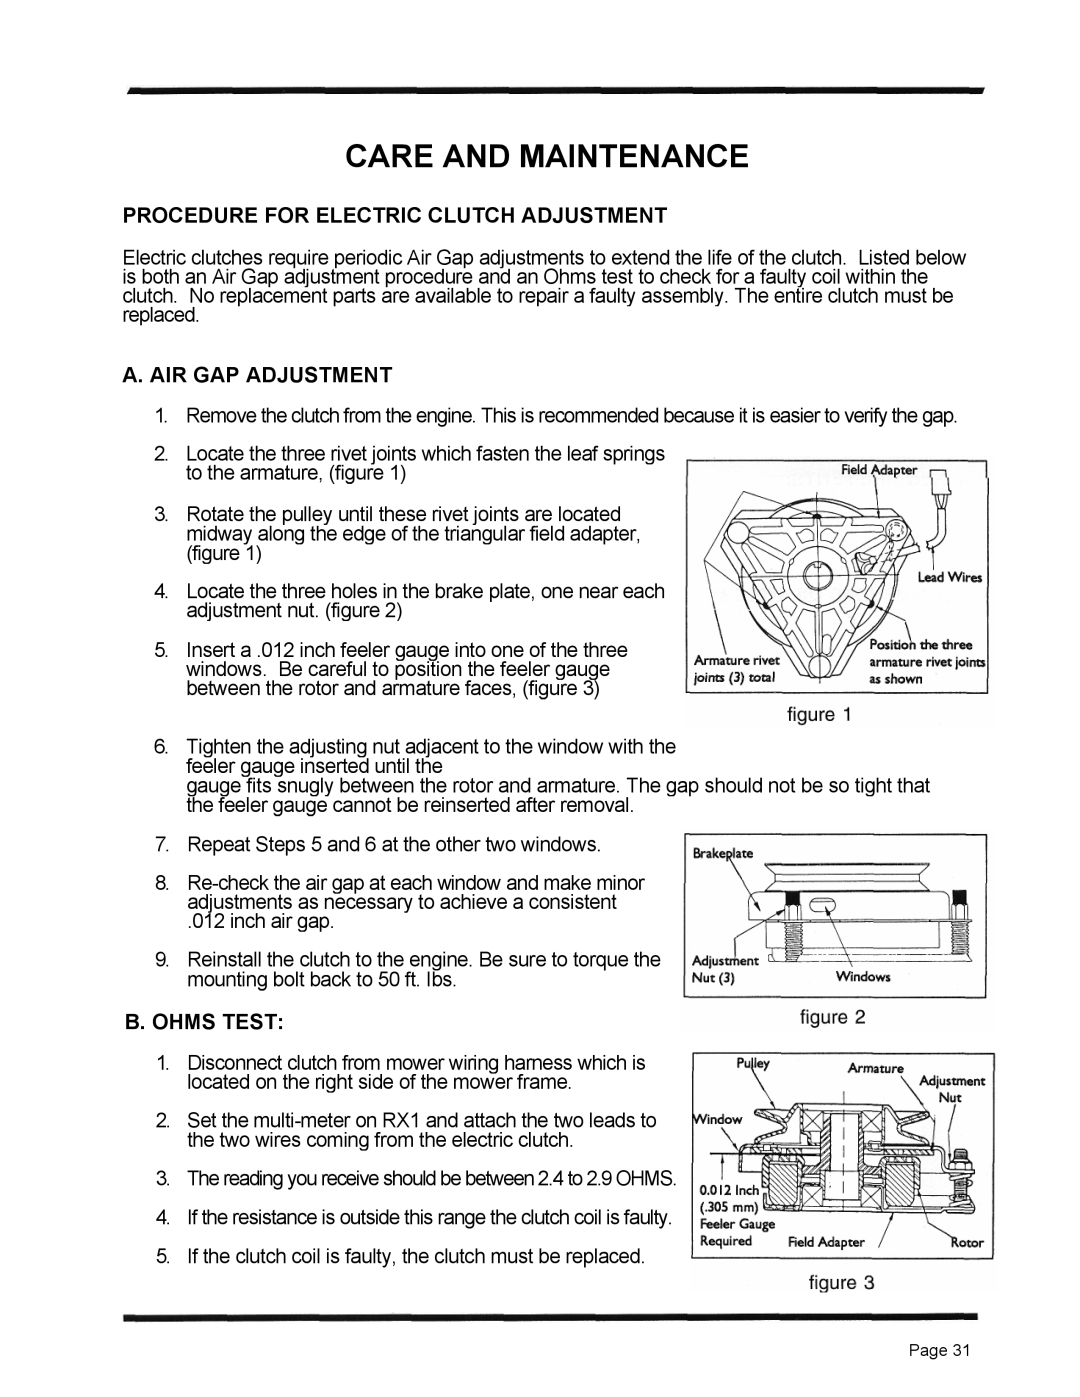 Dixon 6601 Series manual Care And Maintenance, Procedure For Electric Clutch Adjustment, A. Air Gap Adjustment, B.Ohms Test 